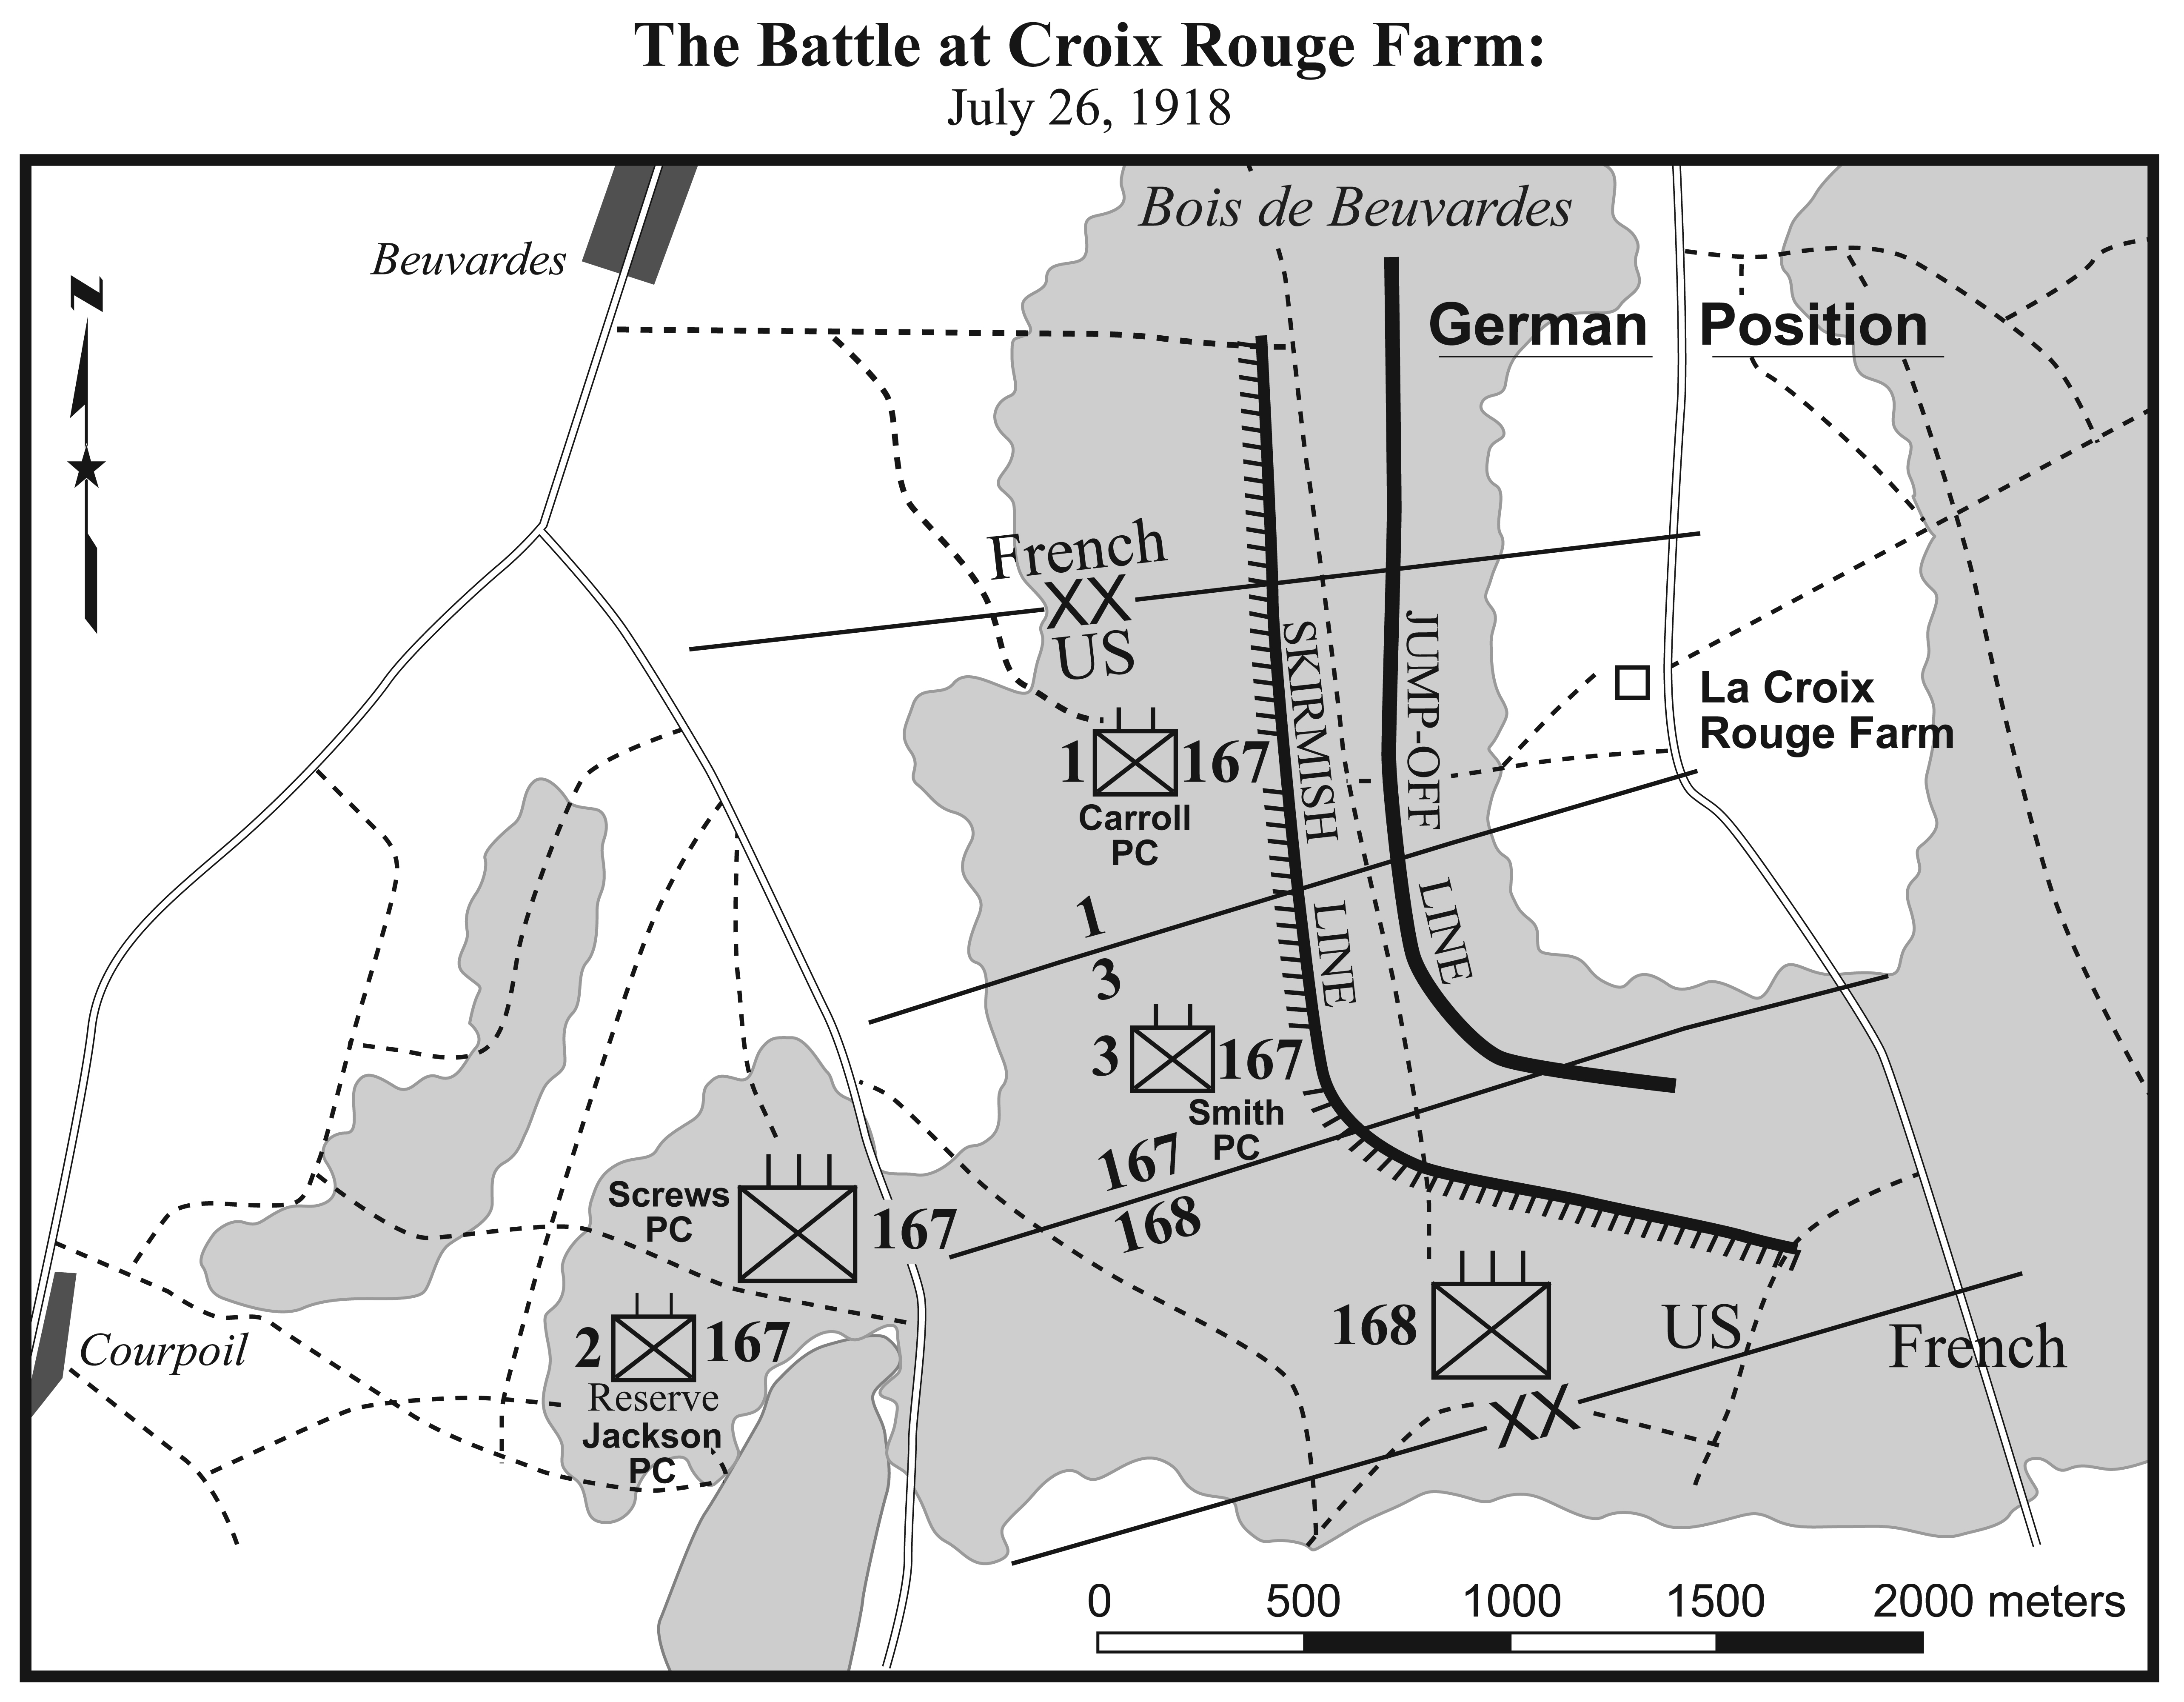 II.3. The Battle at Croix Rouge Farm.